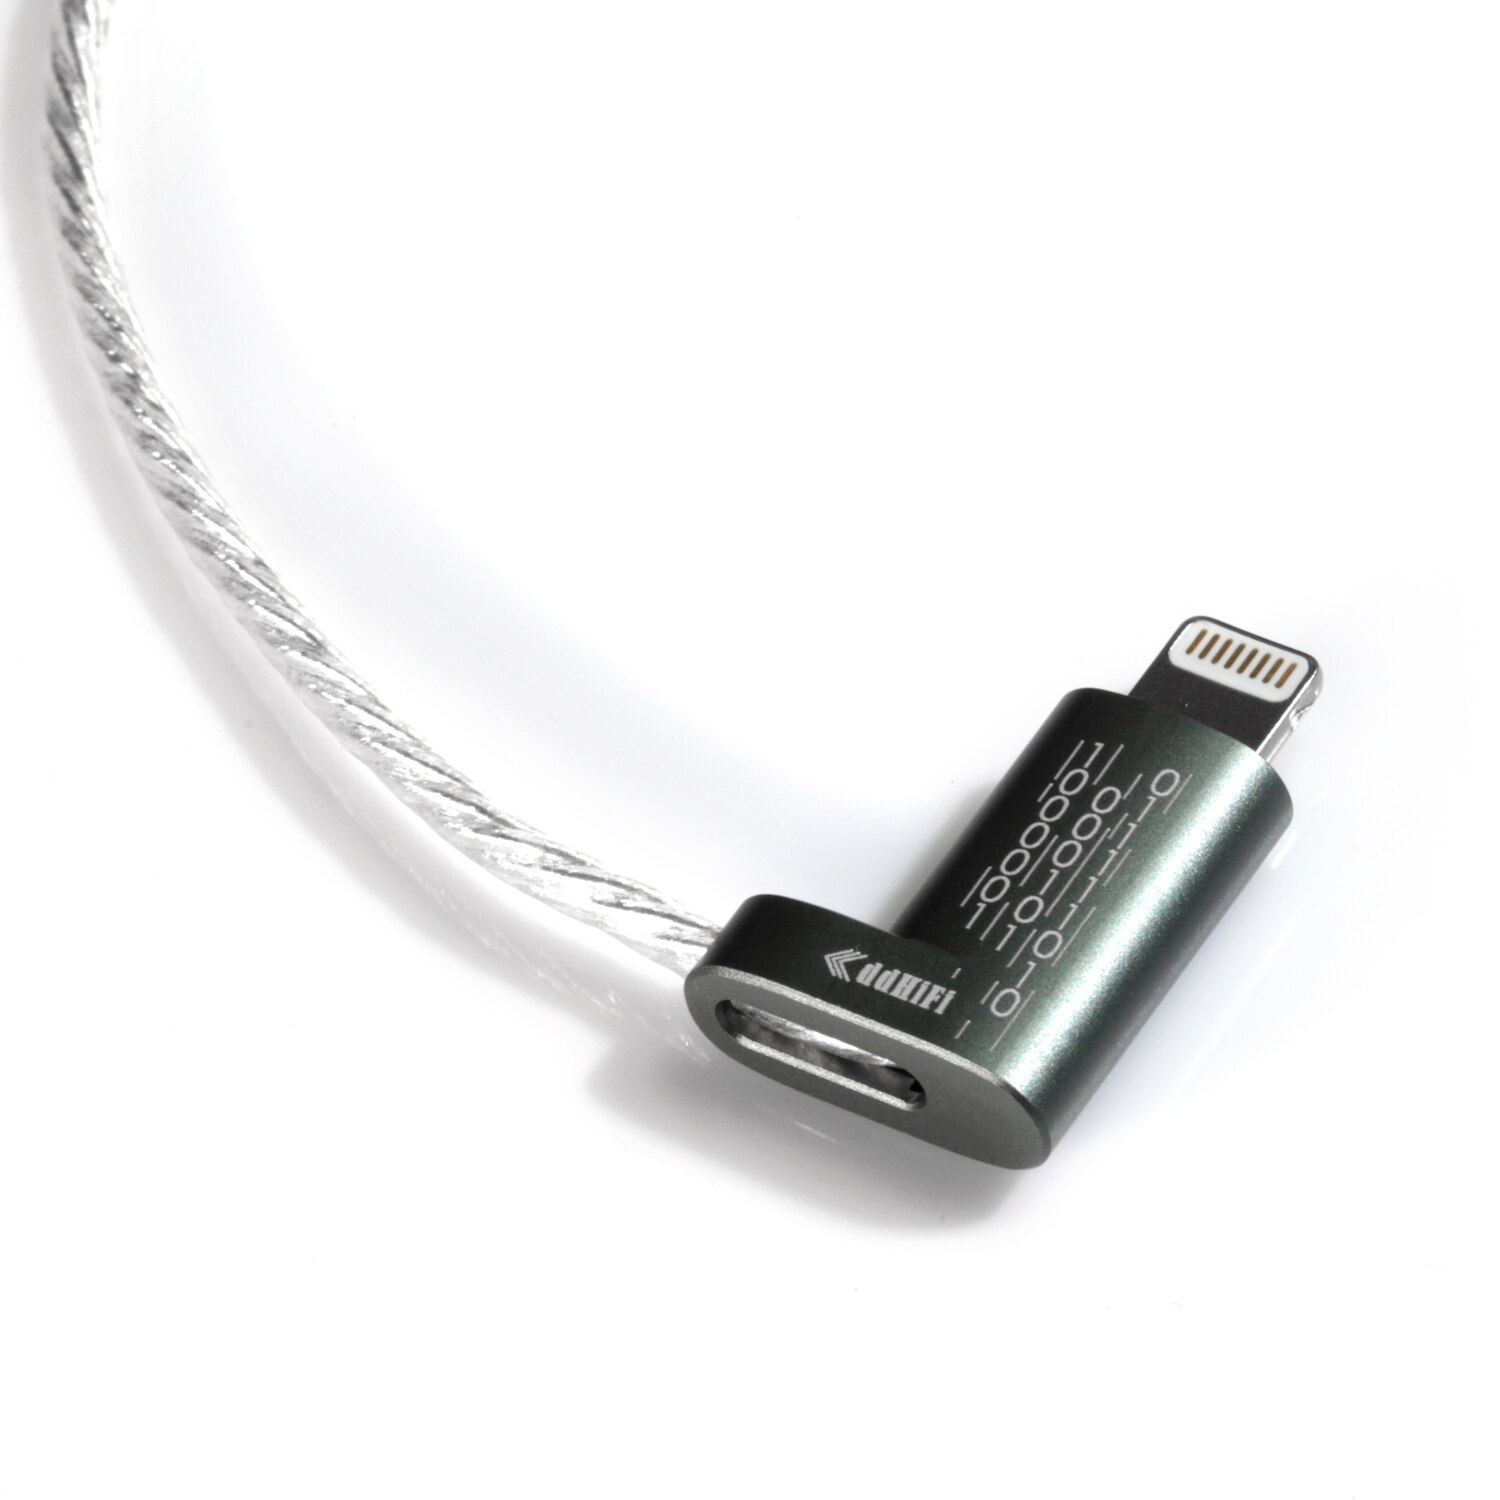 Dd Ddhifi MFi06 Licht-Ning Naar Usb Type C Data Cable Adapter Converter Voor Ios Iphone Fiio Q3 Q5S